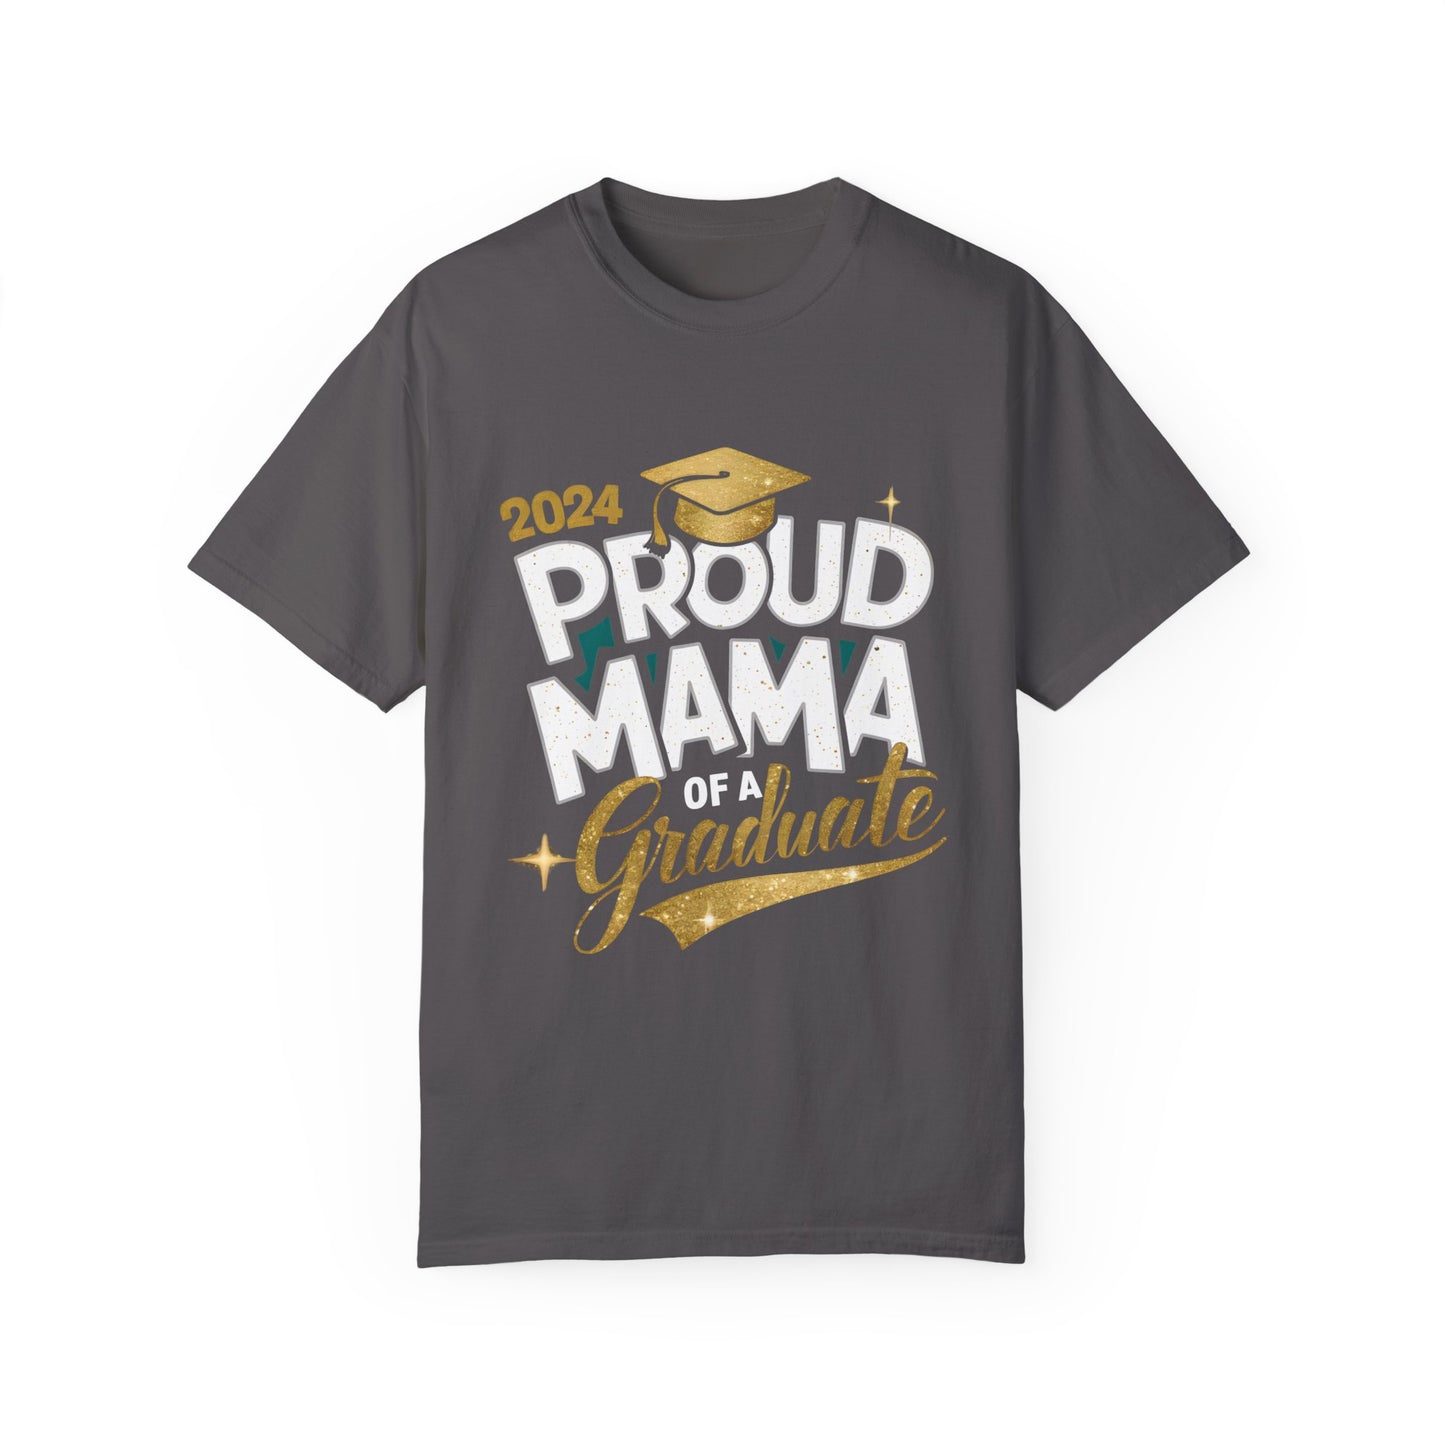 Proud Mama of a 2024 Graduate Unisex Garment-dyed T-shirt Cotton Funny Humorous Graphic Soft Premium Unisex Men Women Graphite T-shirt Birthday Gift-8